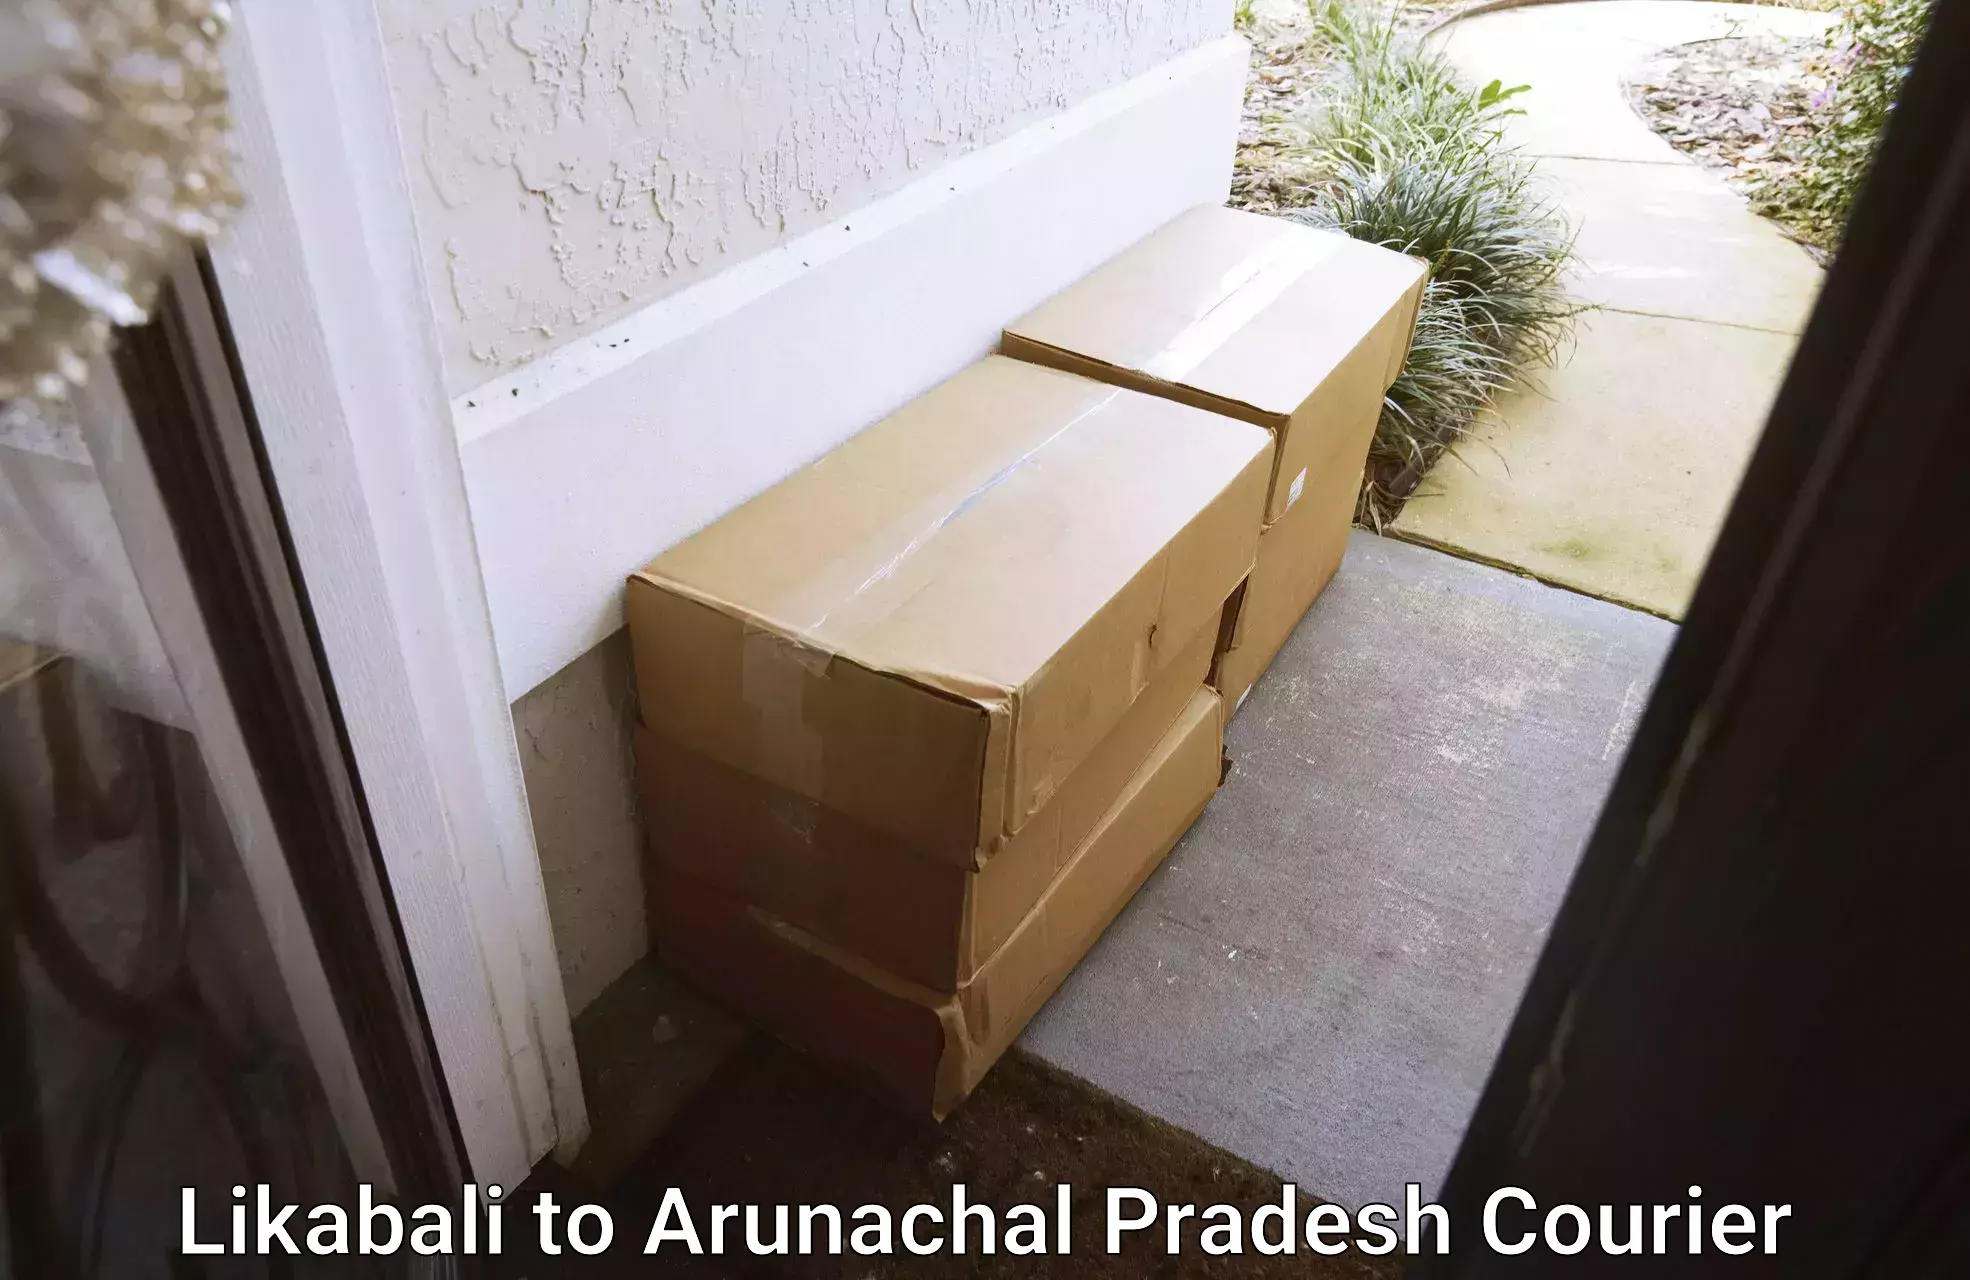 Courier service partnerships Likabali to Arunachal Pradesh